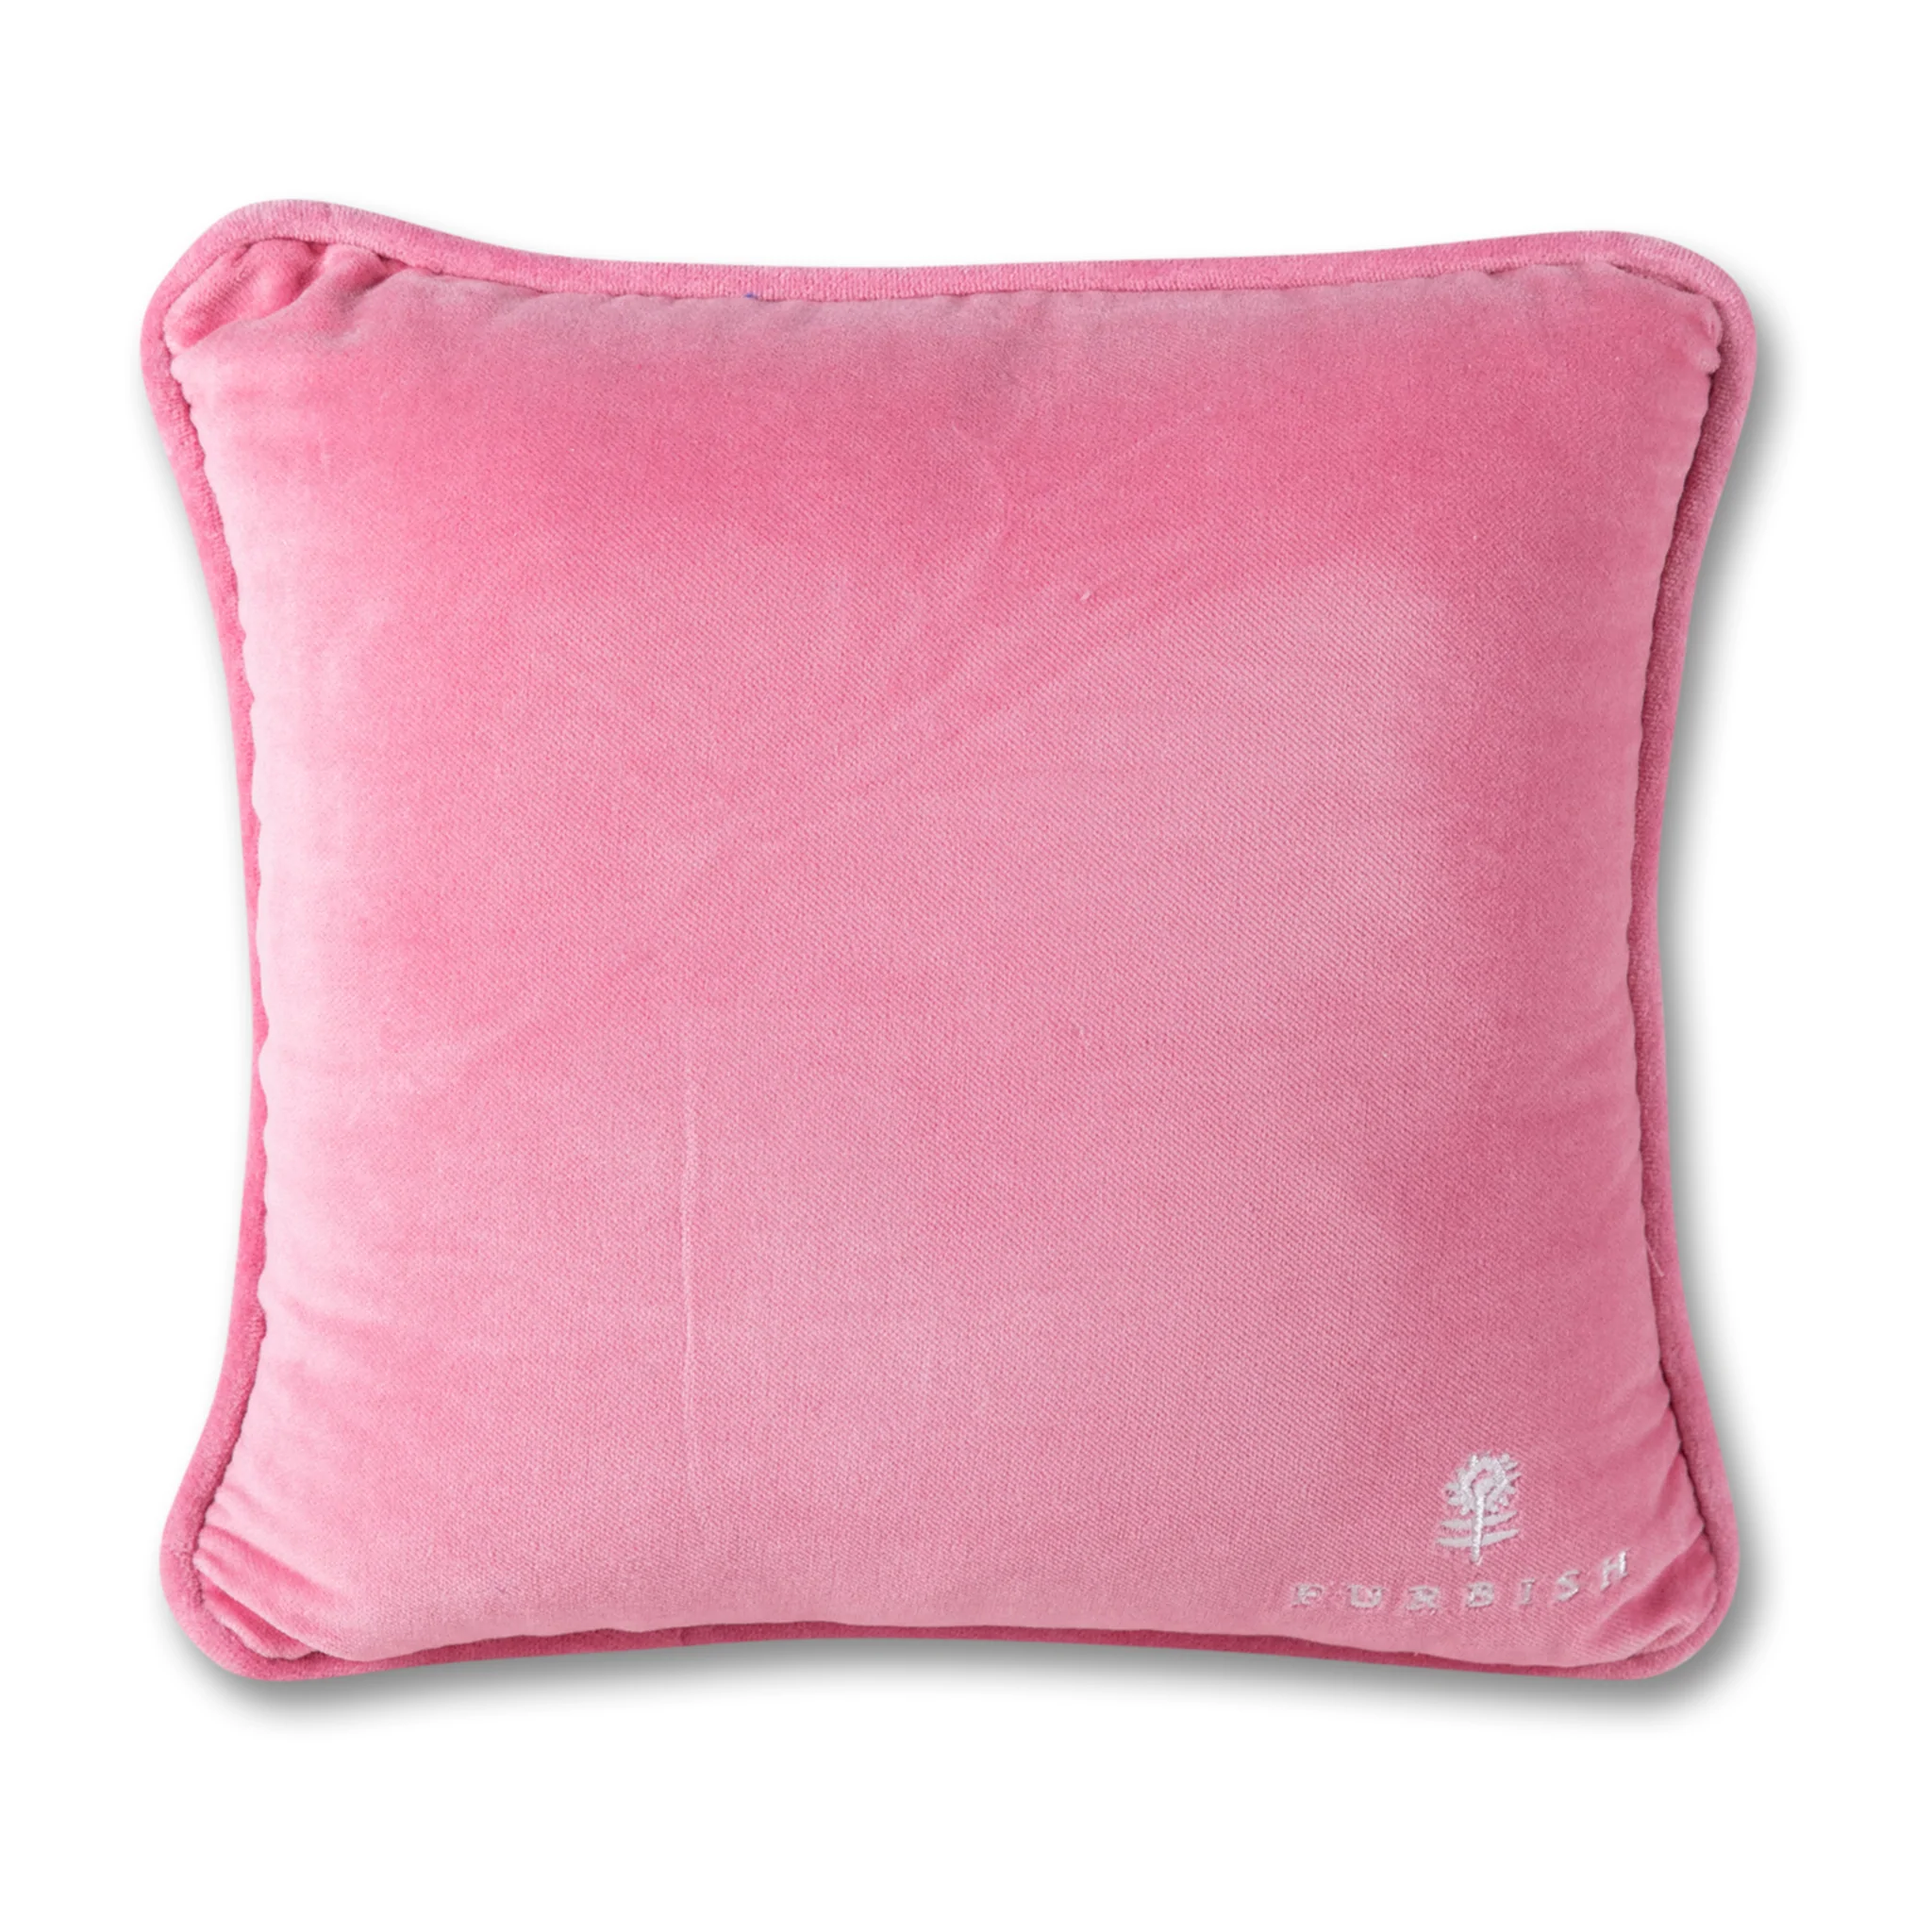 Filthy Animal Needlepoint Pillow